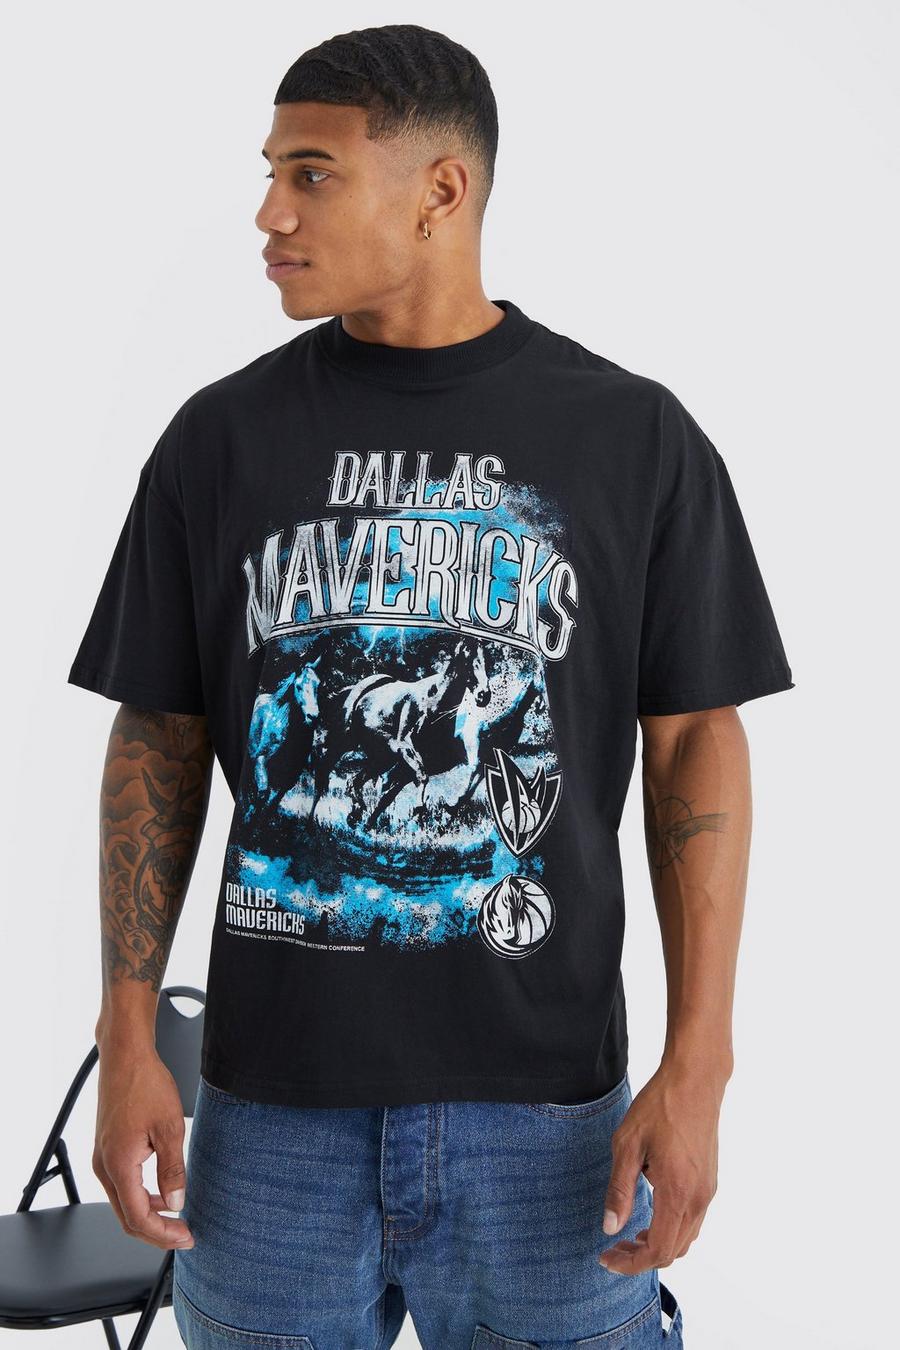 We Are Dallas Mavericks Playoff T-Shirt